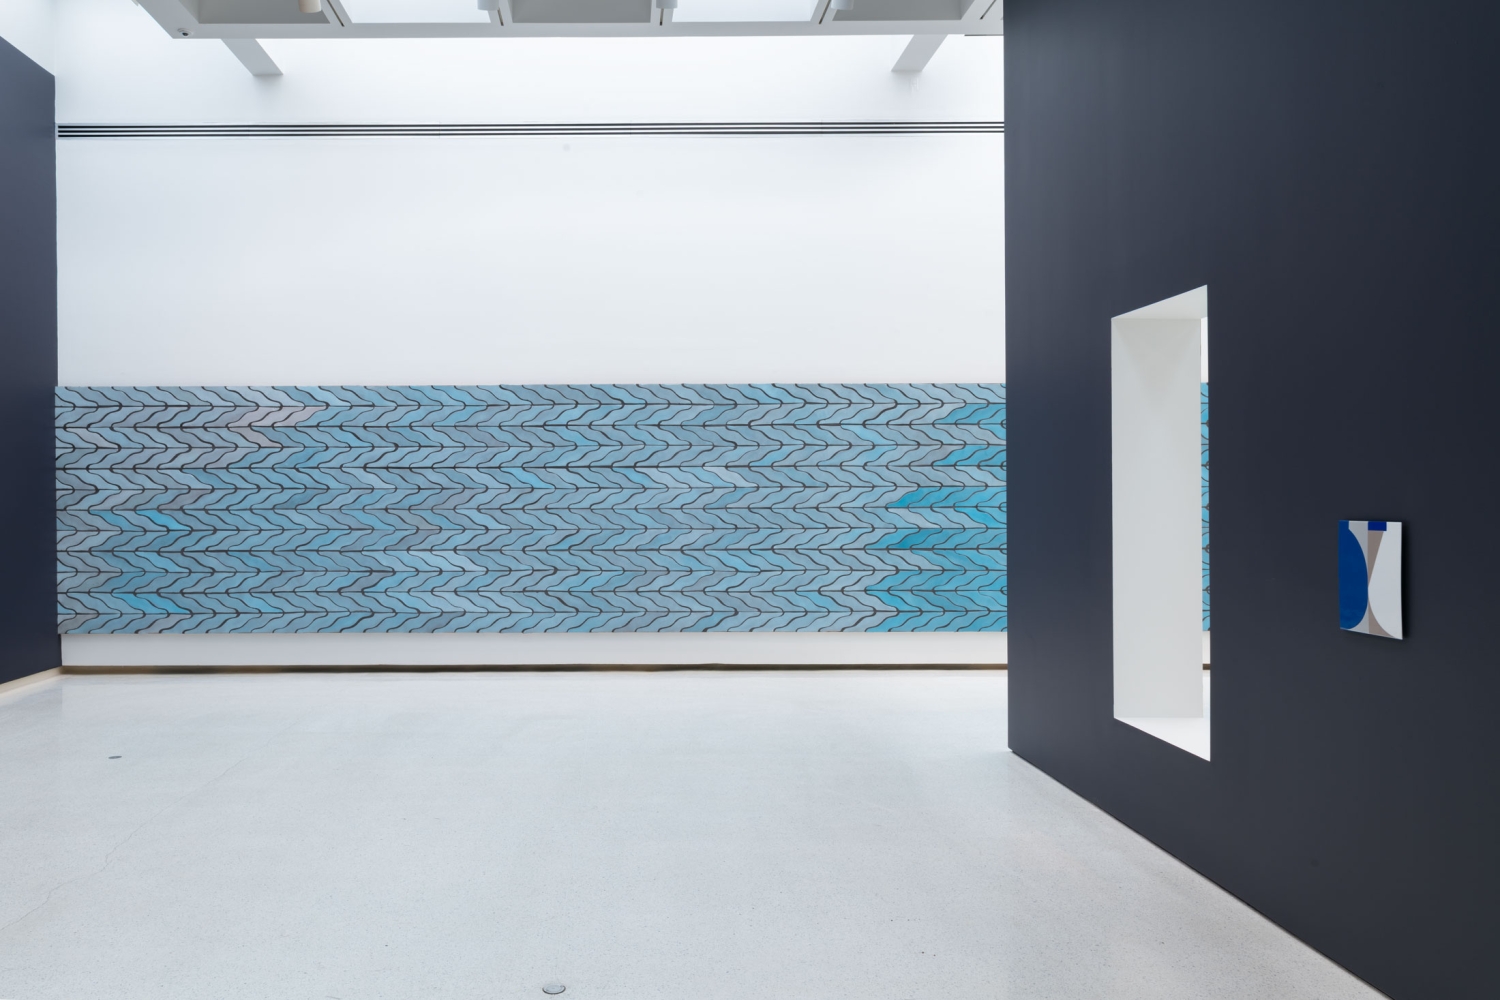 Sarah Crowner
Wall (Wavy Arrow Terracotta), 2018
Glazed terracotta tiles, plywood, aluminum, mortar, grout
Dimensions variable